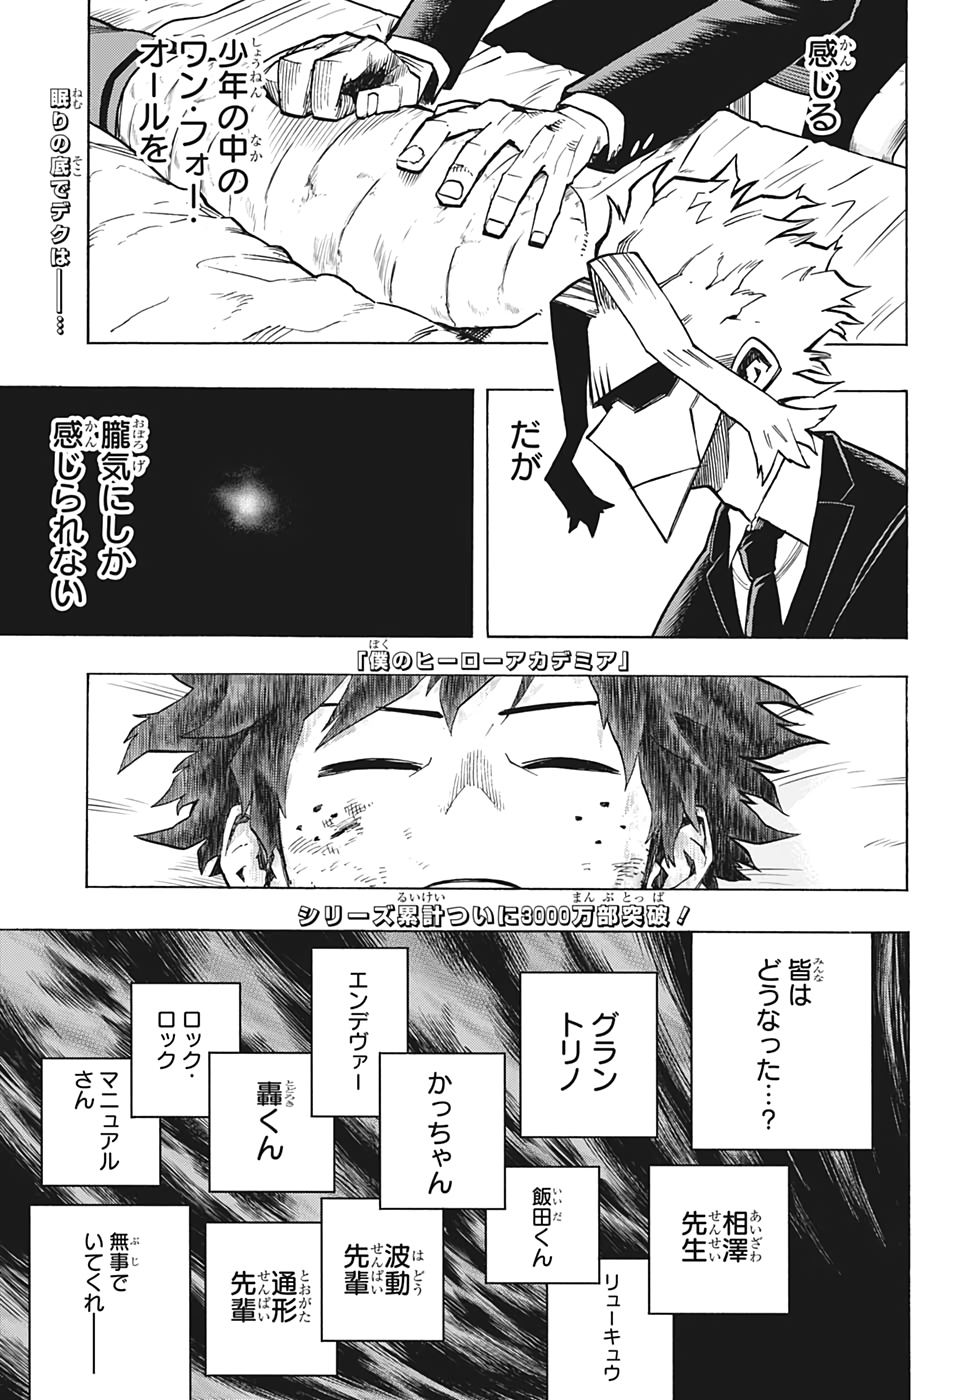 Boku no Hero Academia - Chapter 304 - Page 1